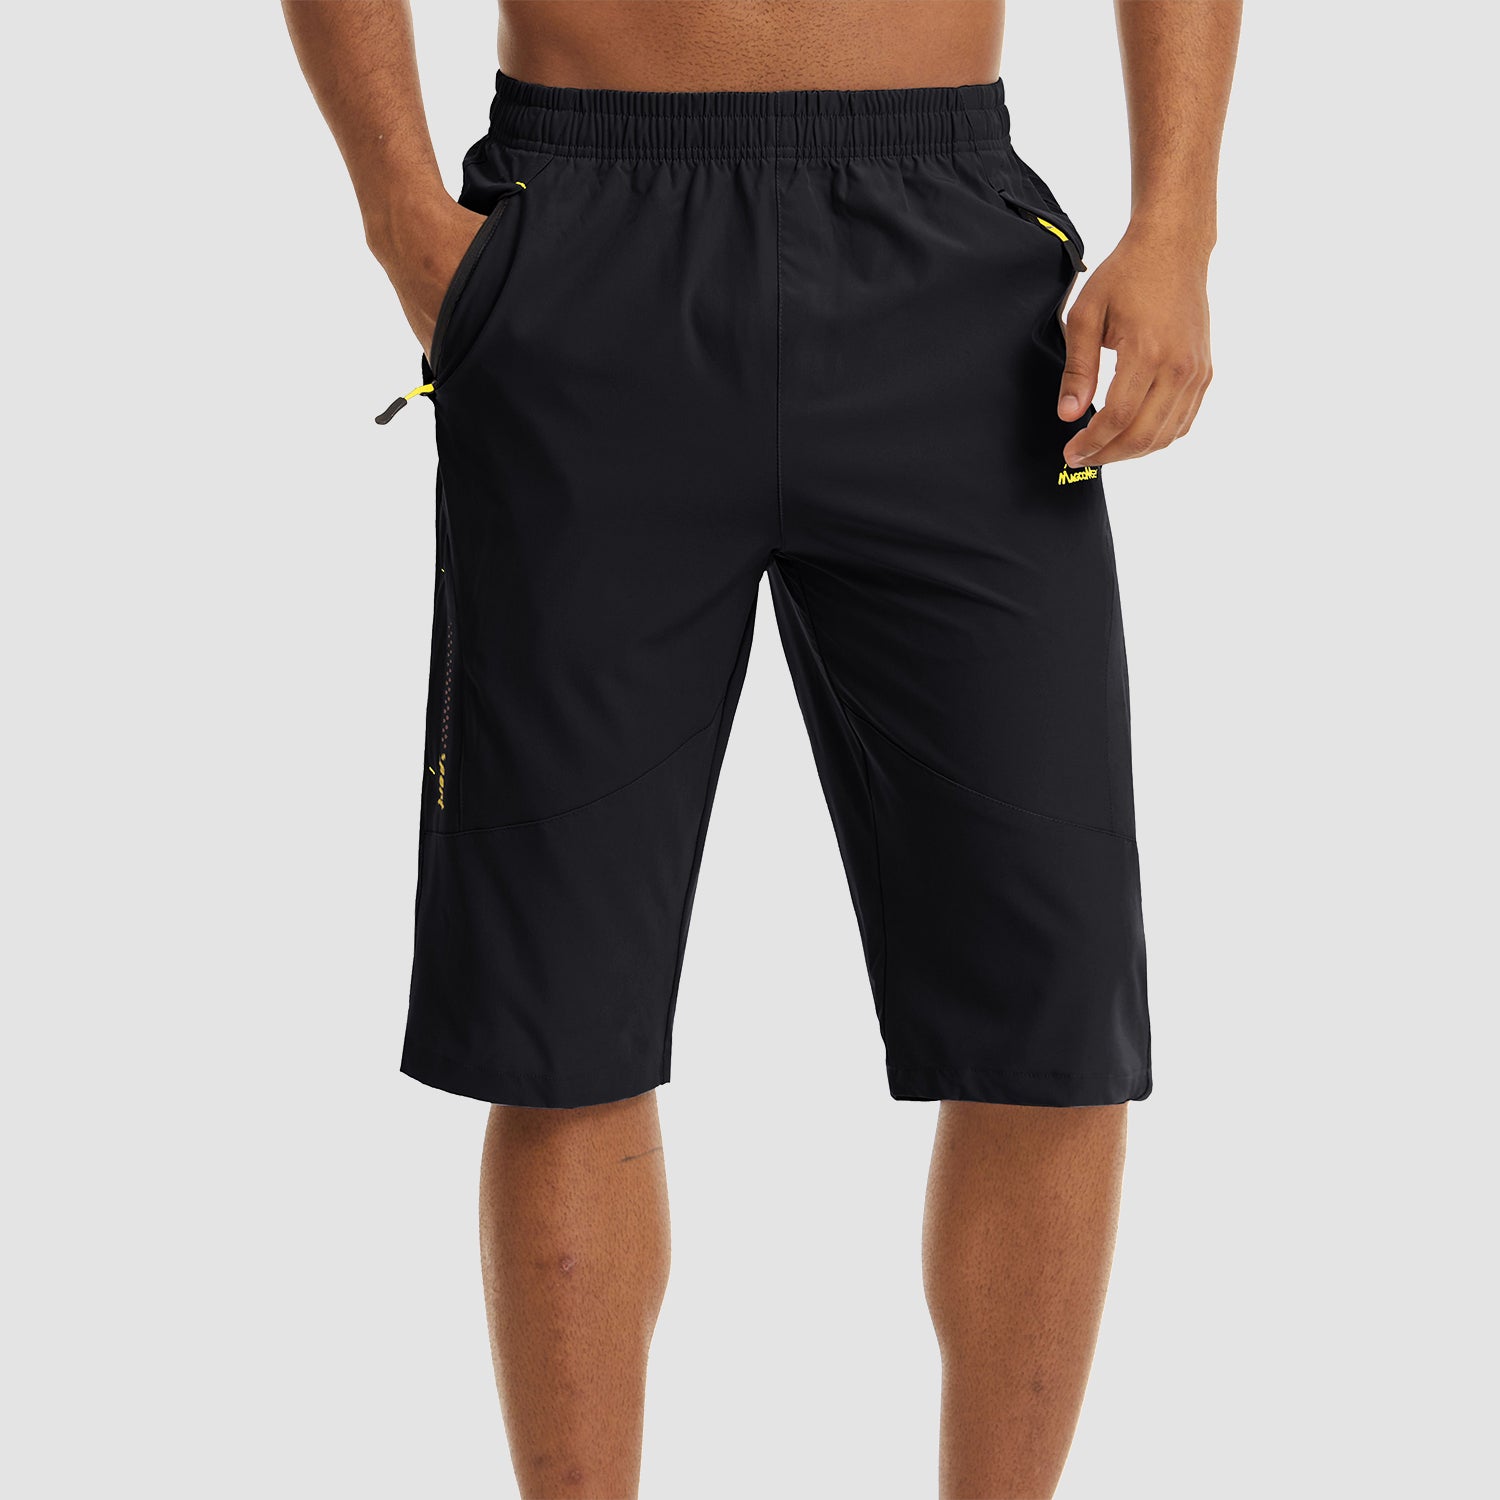 Men's Quick Dry Hiking Running Shorts 3/4 Capri with Zipper Pockets